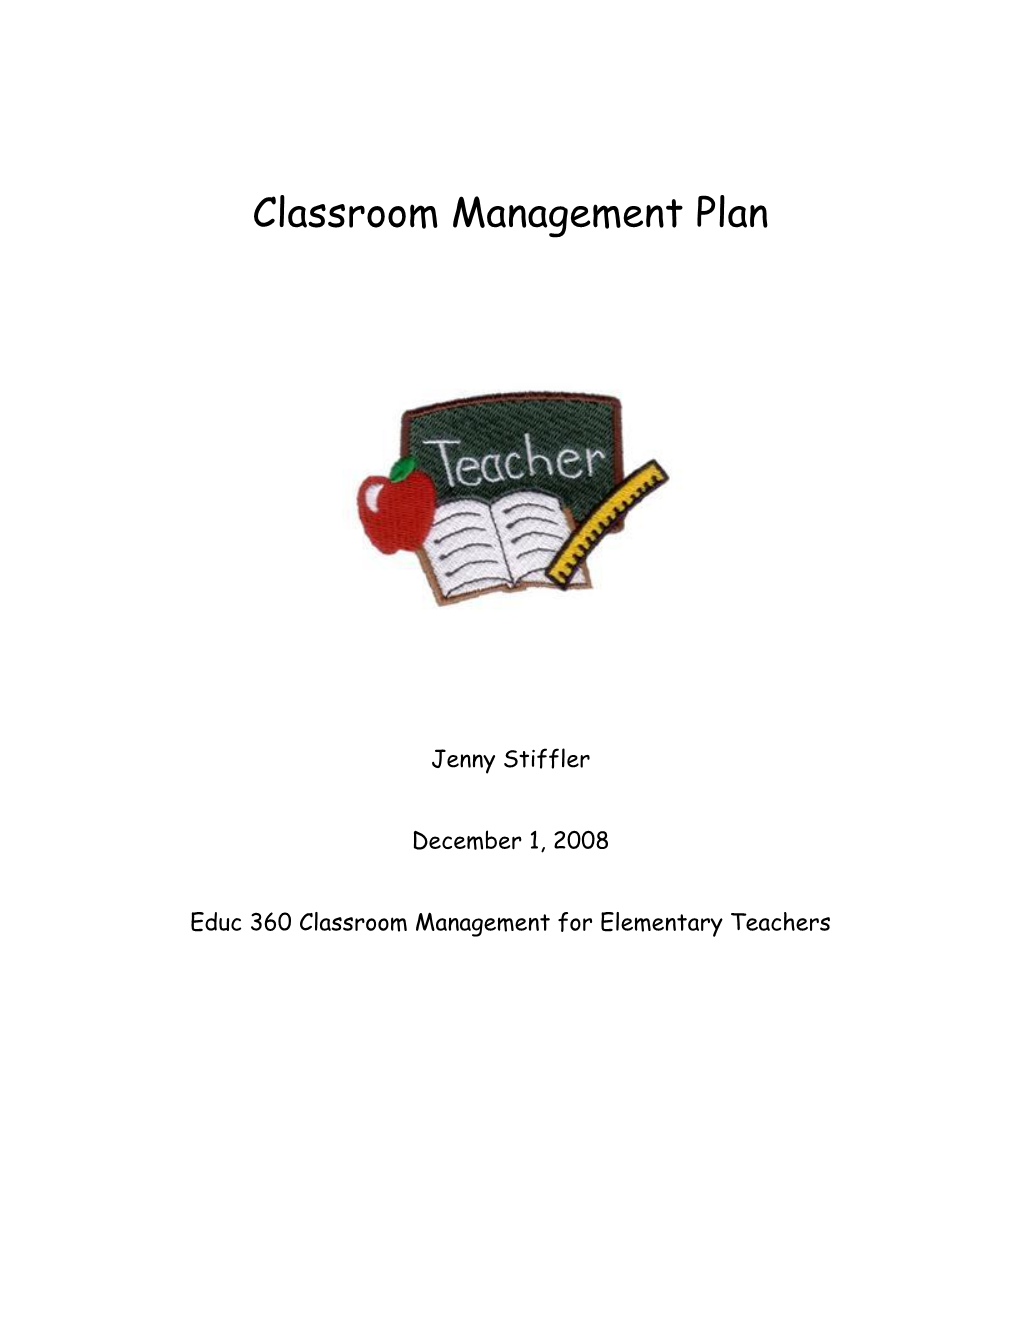 Educ 360 Classroom Management for Elementary Teachers